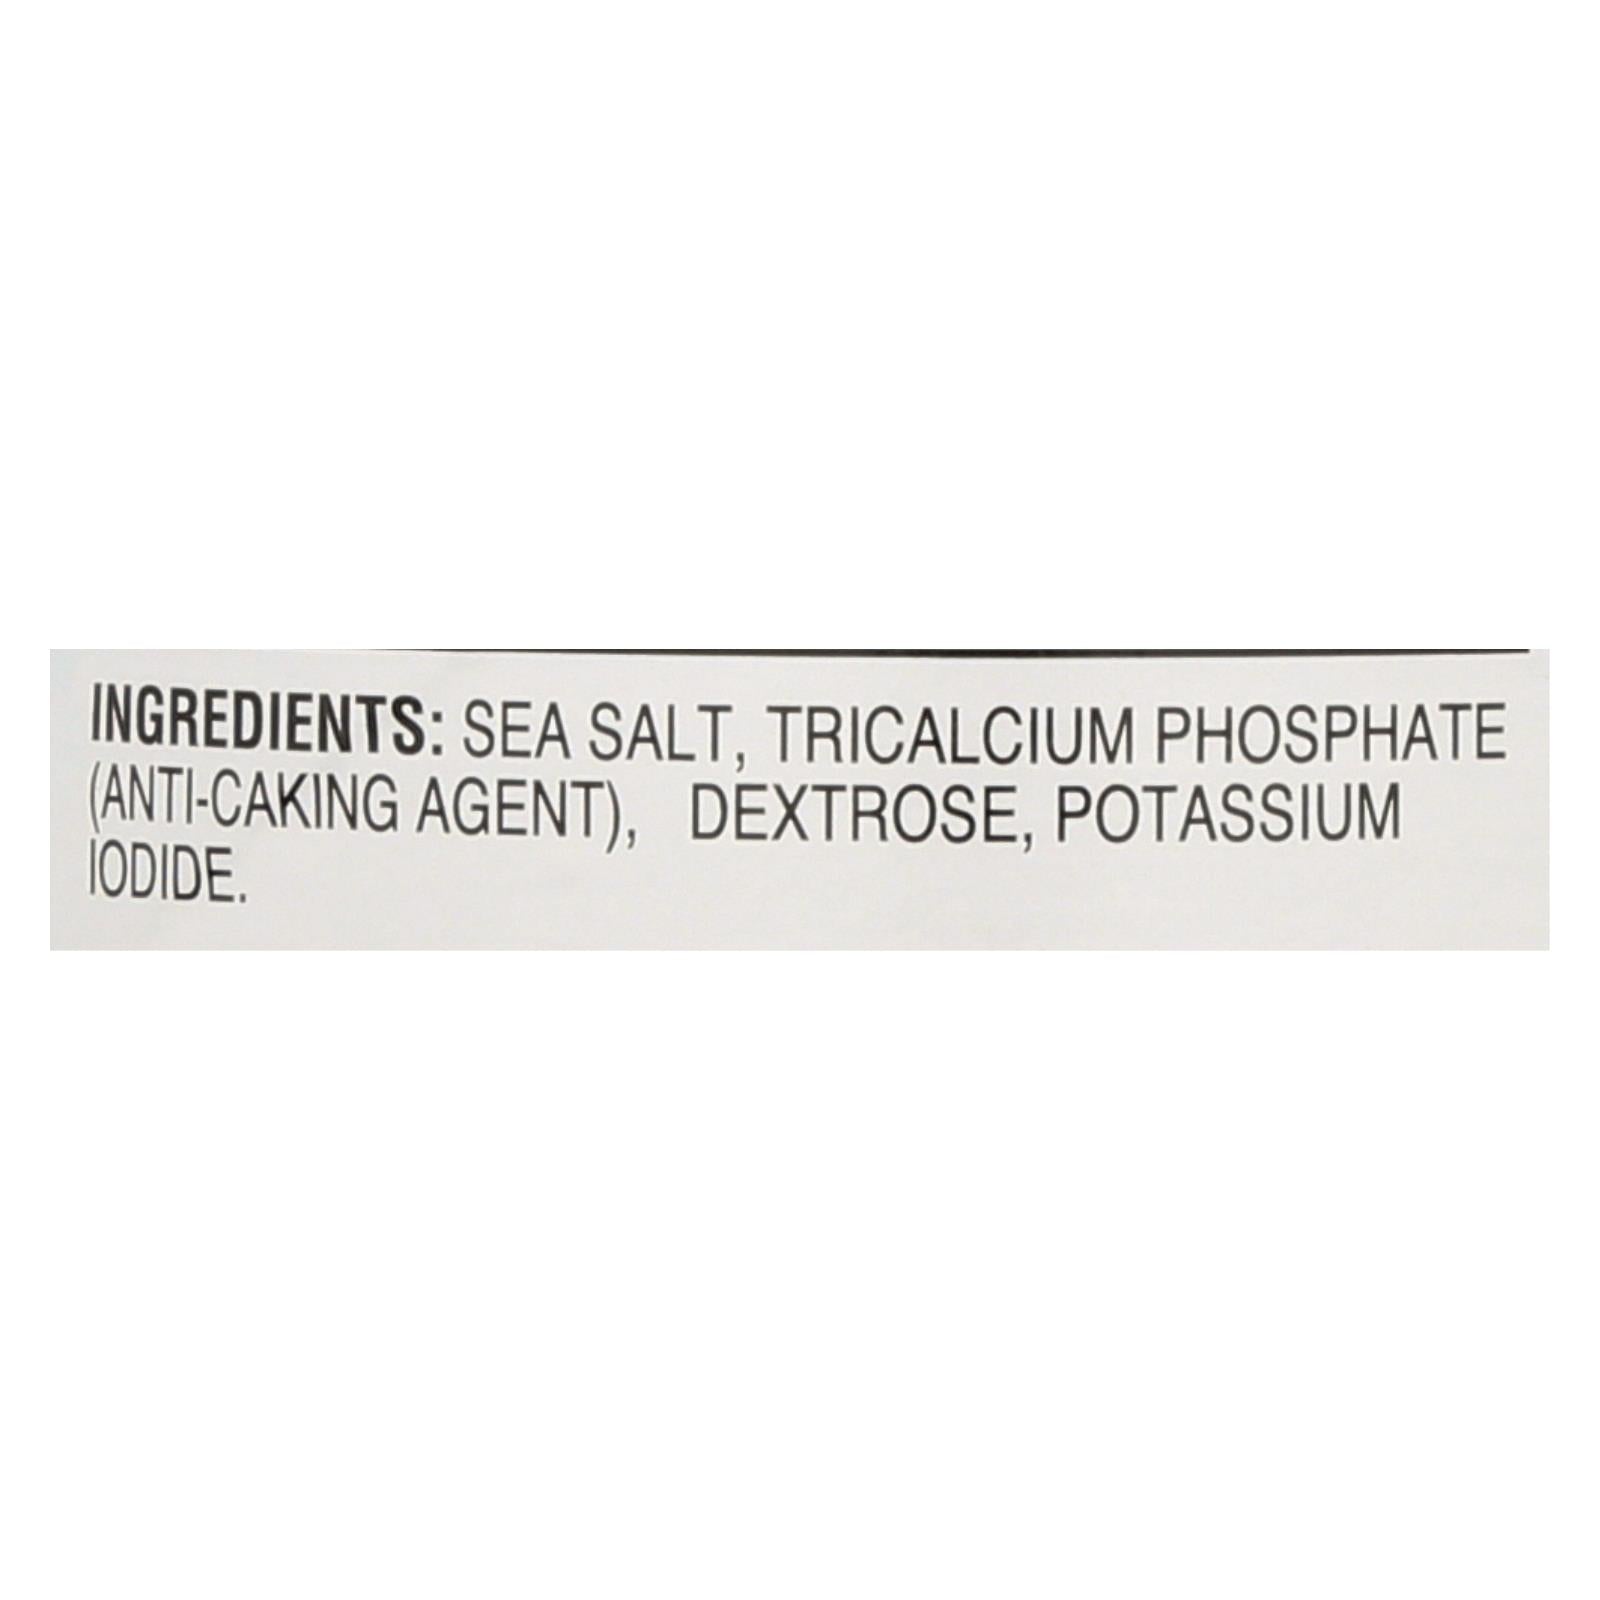 Hain Sea Salt - Iodized - Case Of 8 - 21 Oz | OnlyNaturals.us